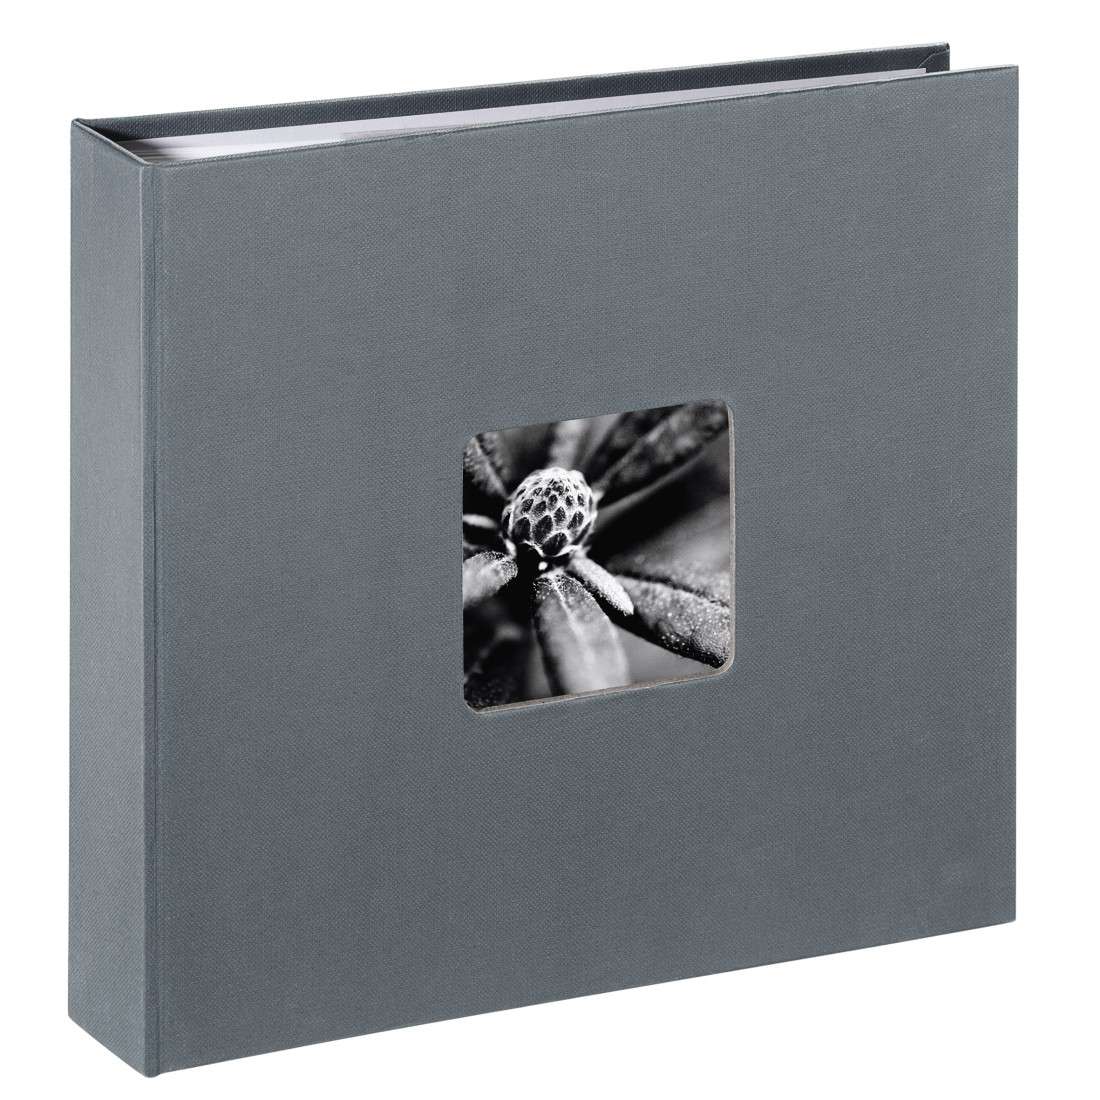 Memo-Album Fine Art, für 160 Fotos im Format 10x15 cm, Grau